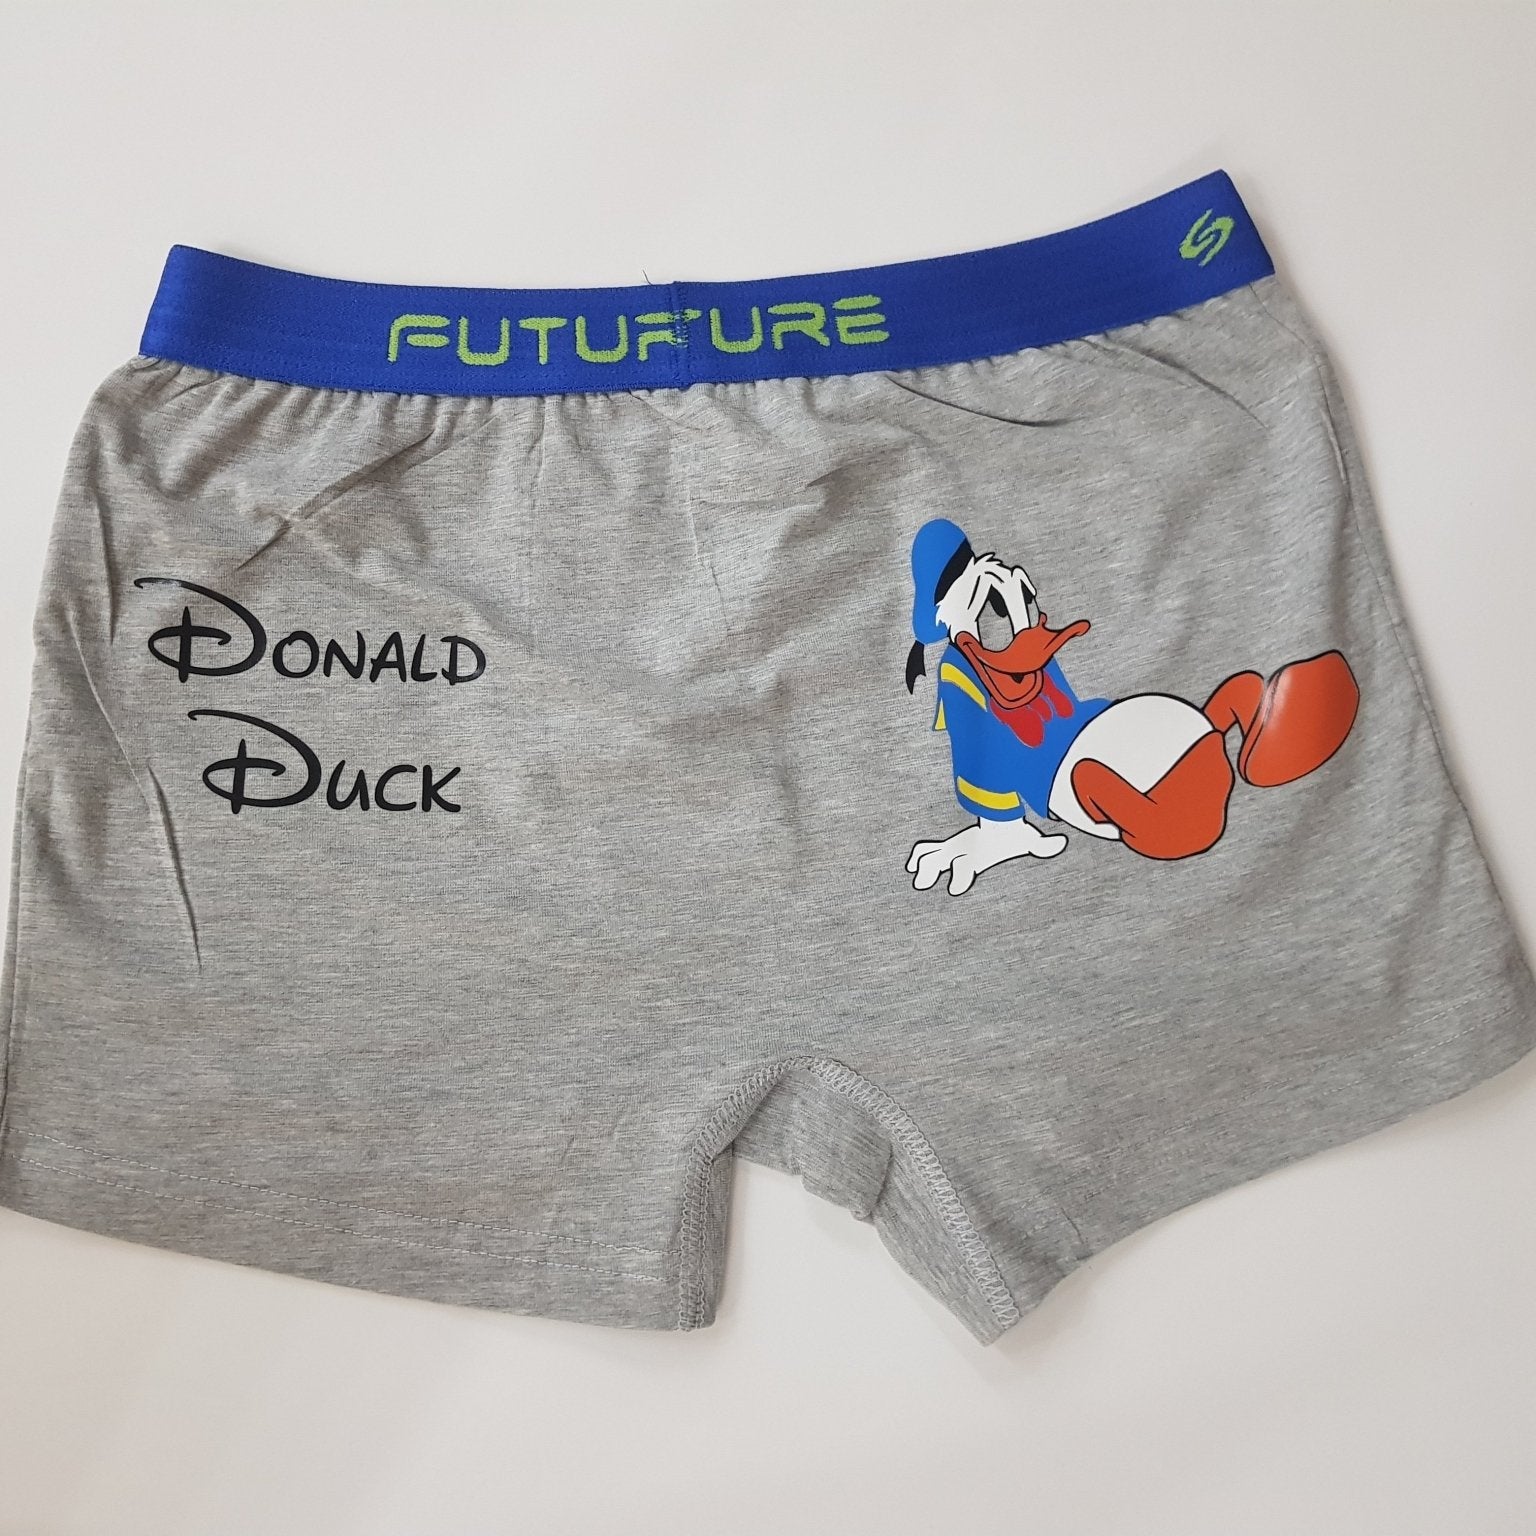 Men underwear - Donald Duck - Etba3lly